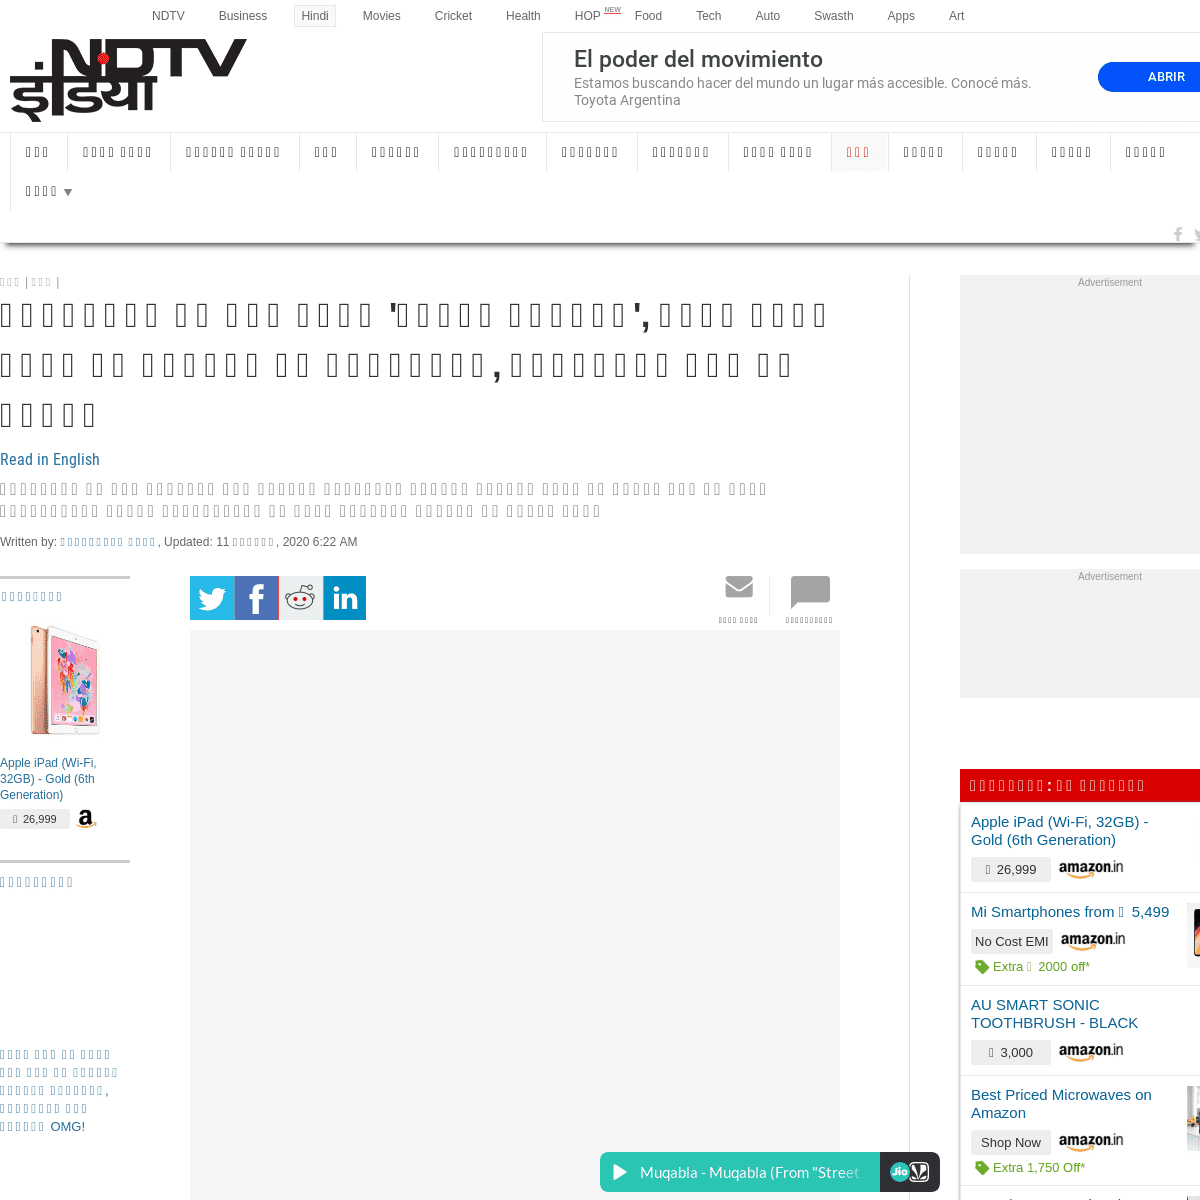 A complete backup of khabar.ndtv.com/news/india/congress-gave-its-oscar-award-many-leaders-winners-including-pm-modi-2178127